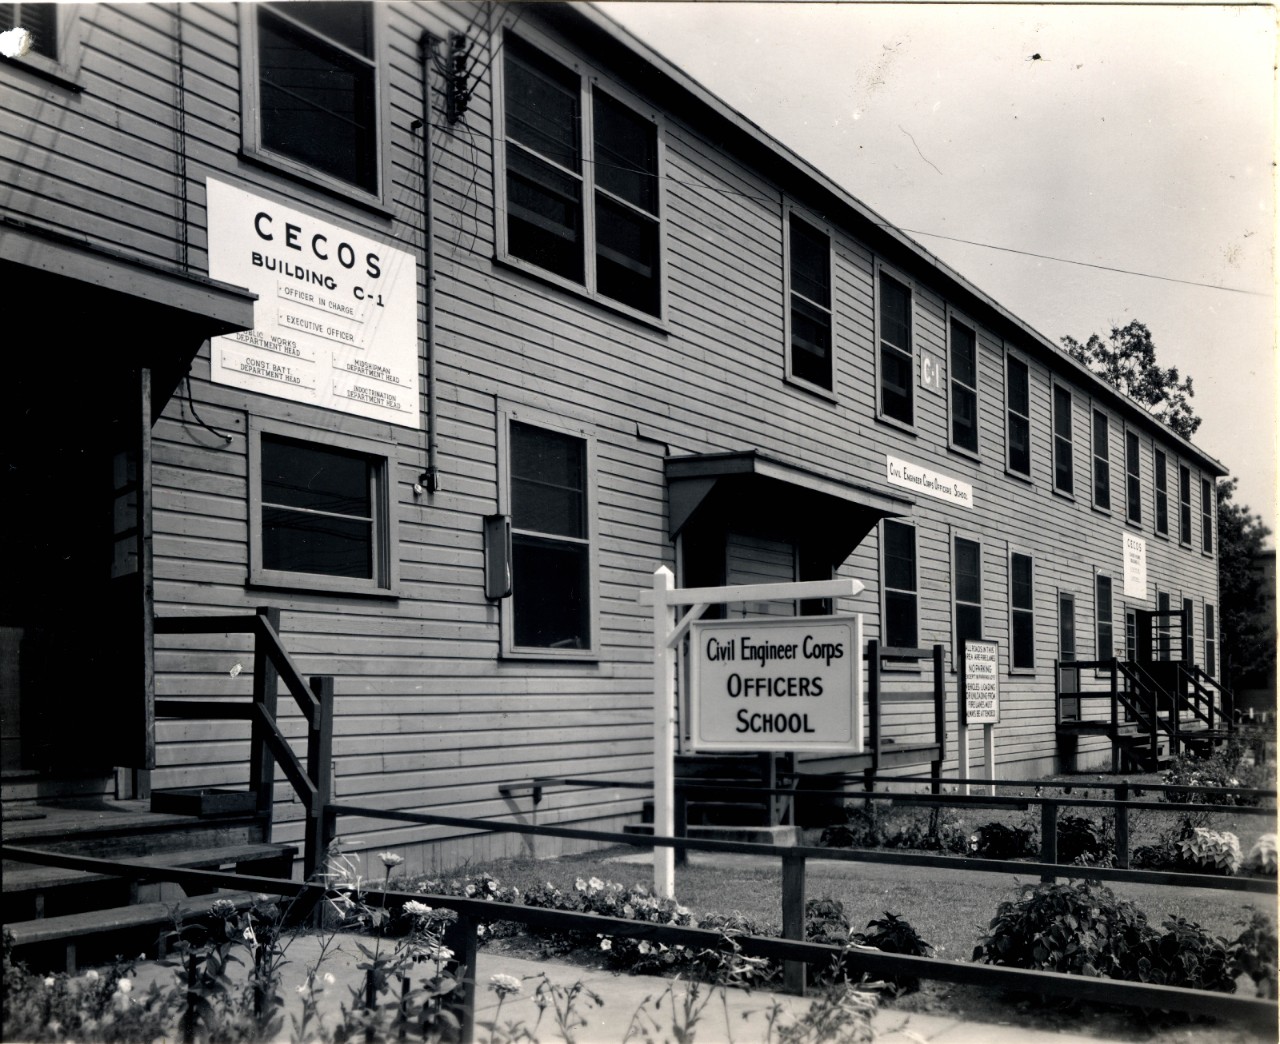 Civil Engineer Corps Officers School, Davisville, RI, 1945